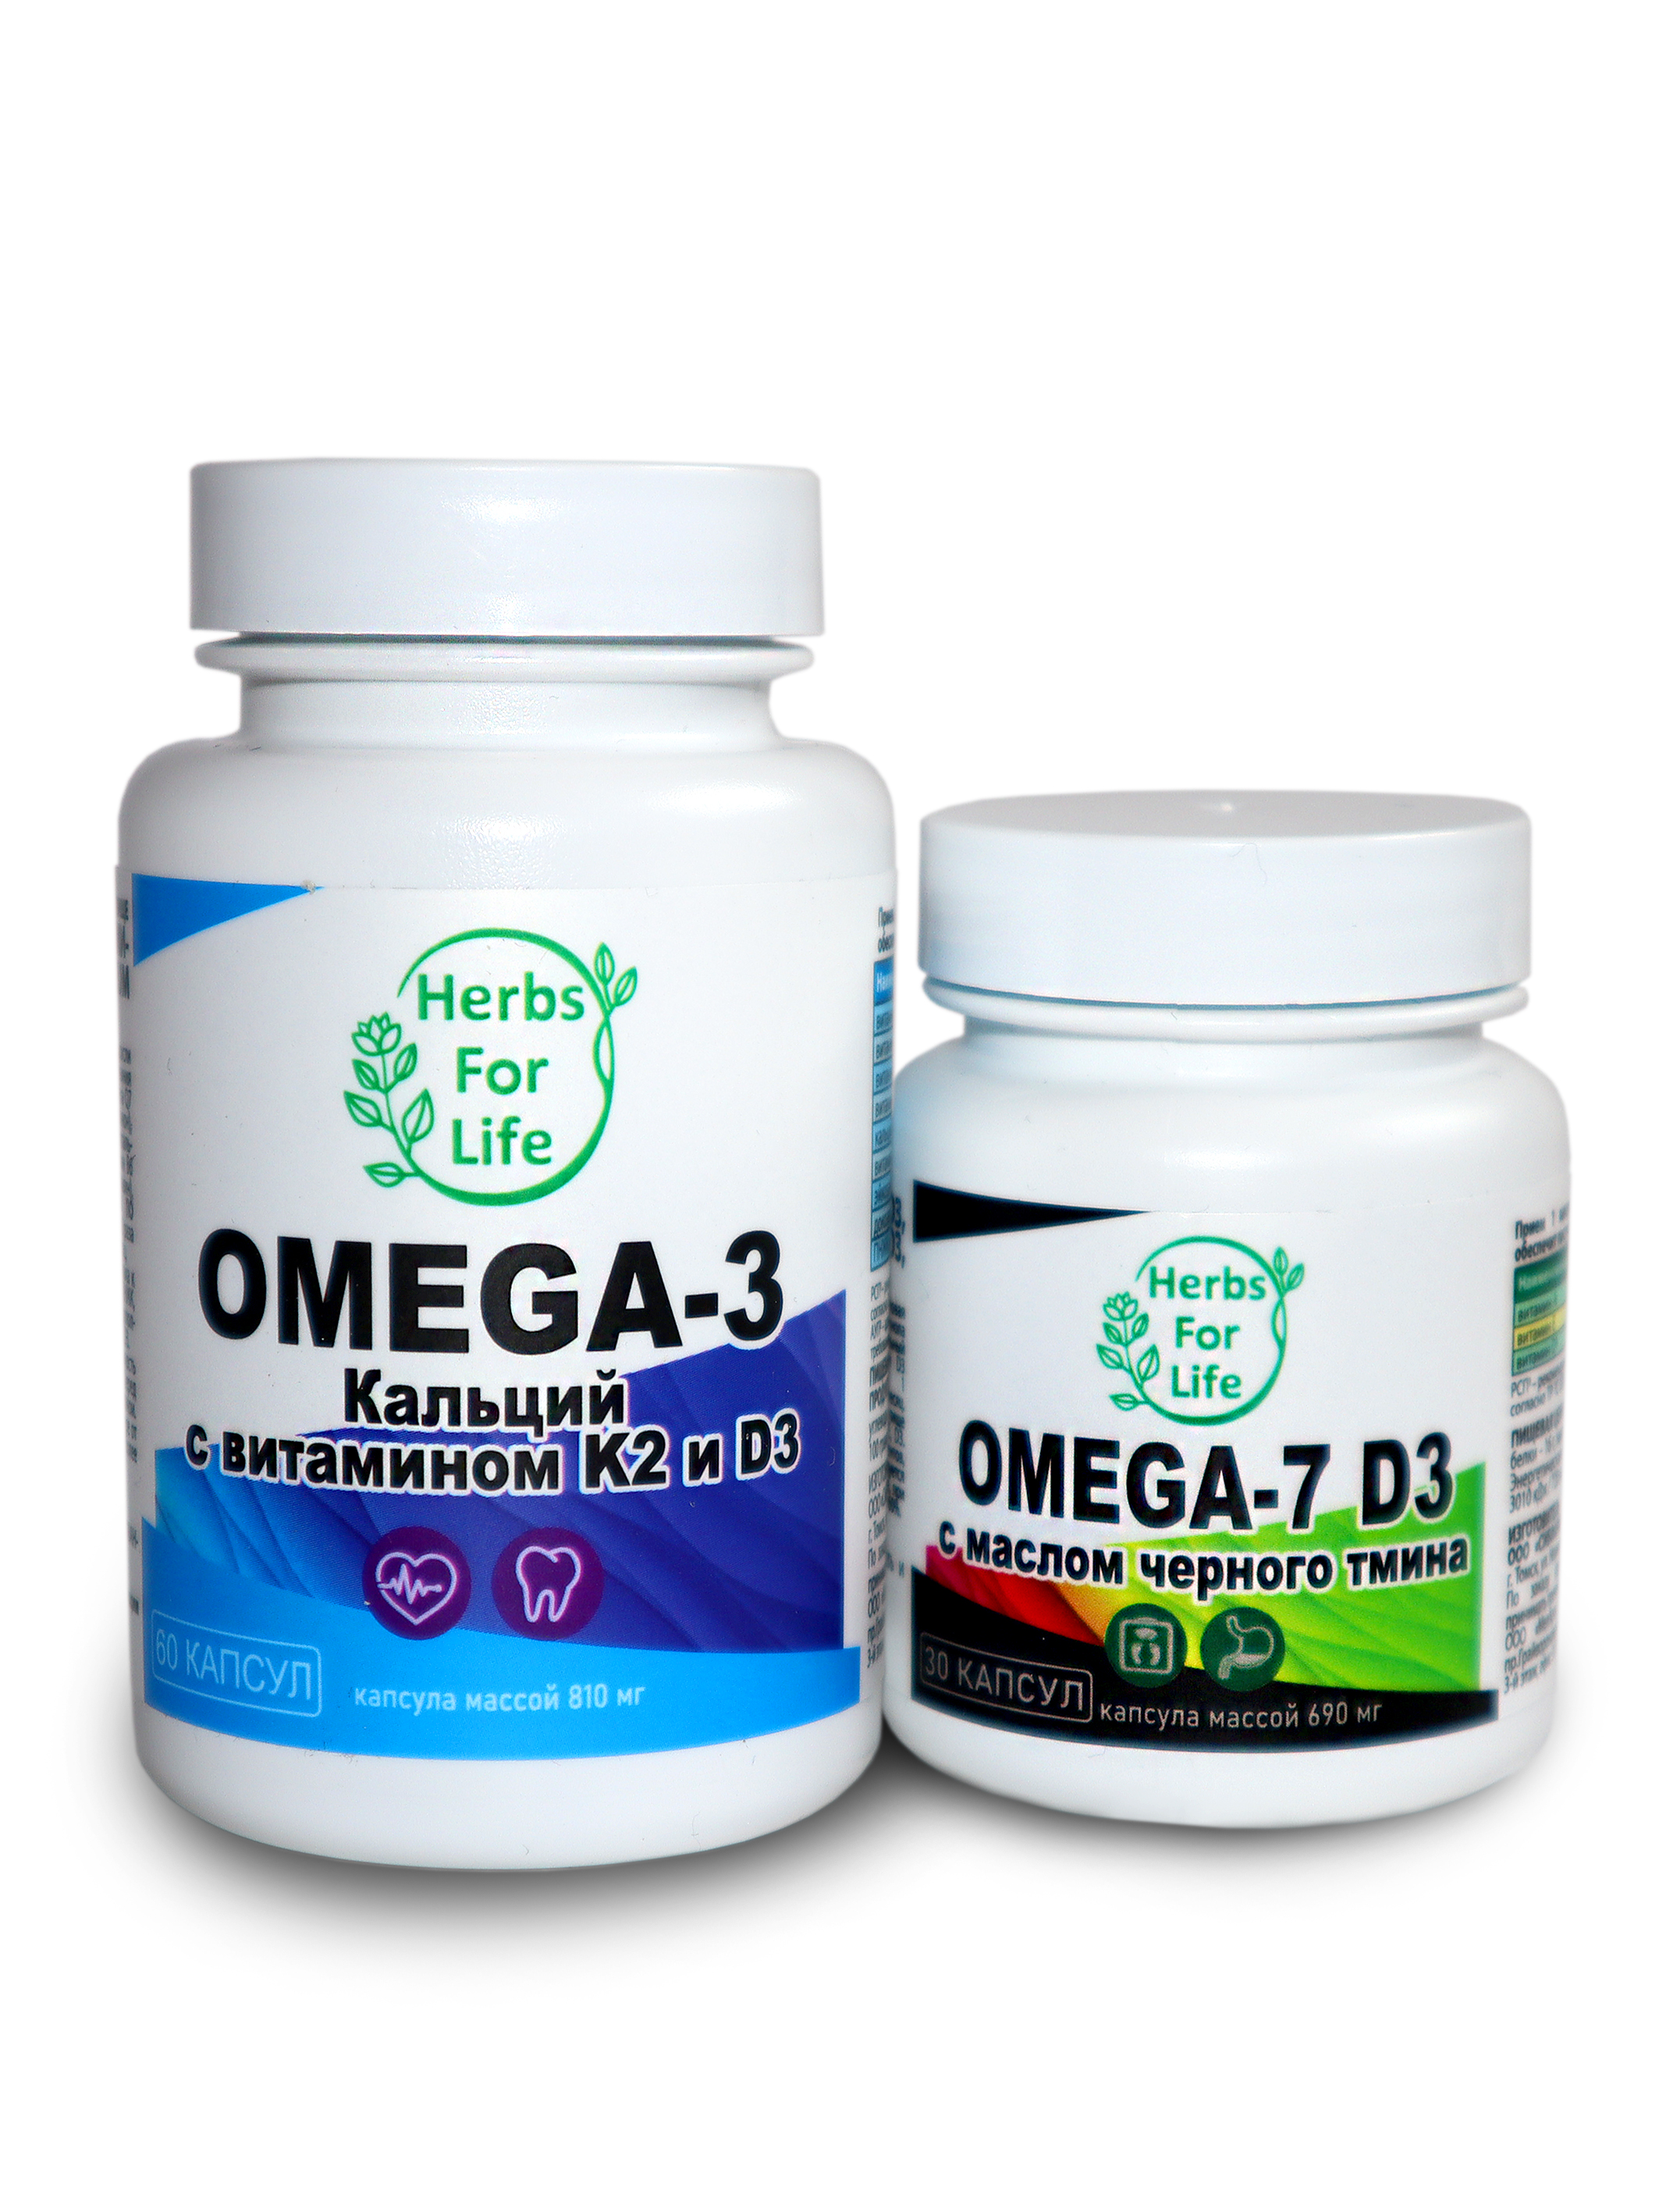 Купить Herbs For Life Omega-3 капсулы 810 мг 60 шт. + Omega-7 D3 капсулы 690 мг 30 шт.